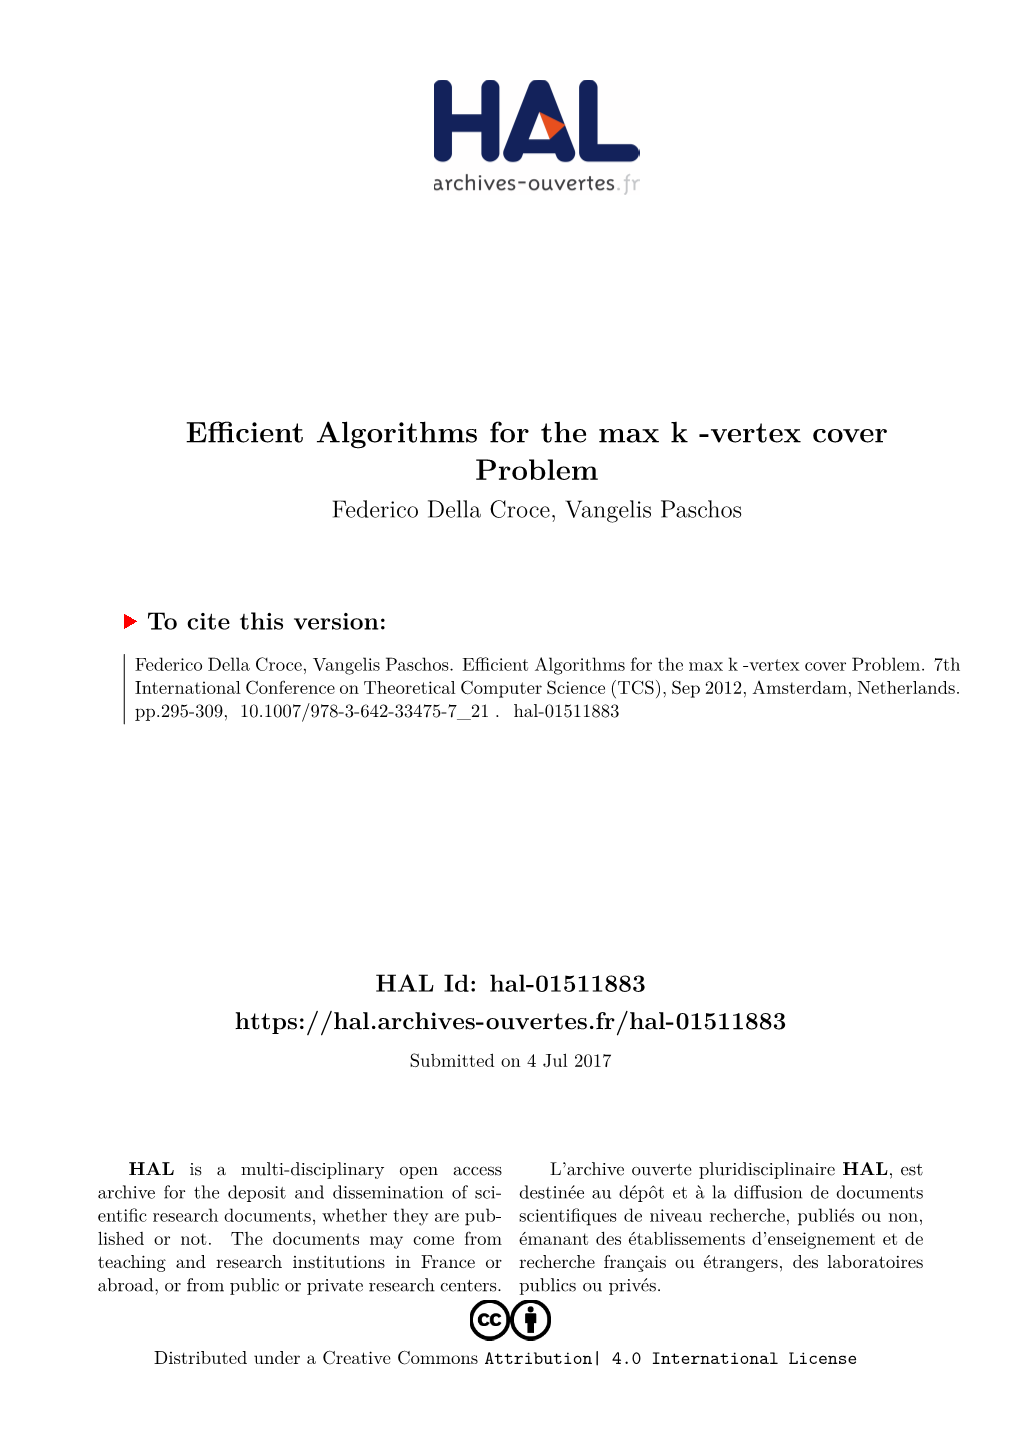 Efficient Algorithms for the Max K -Vertex Cover Problem